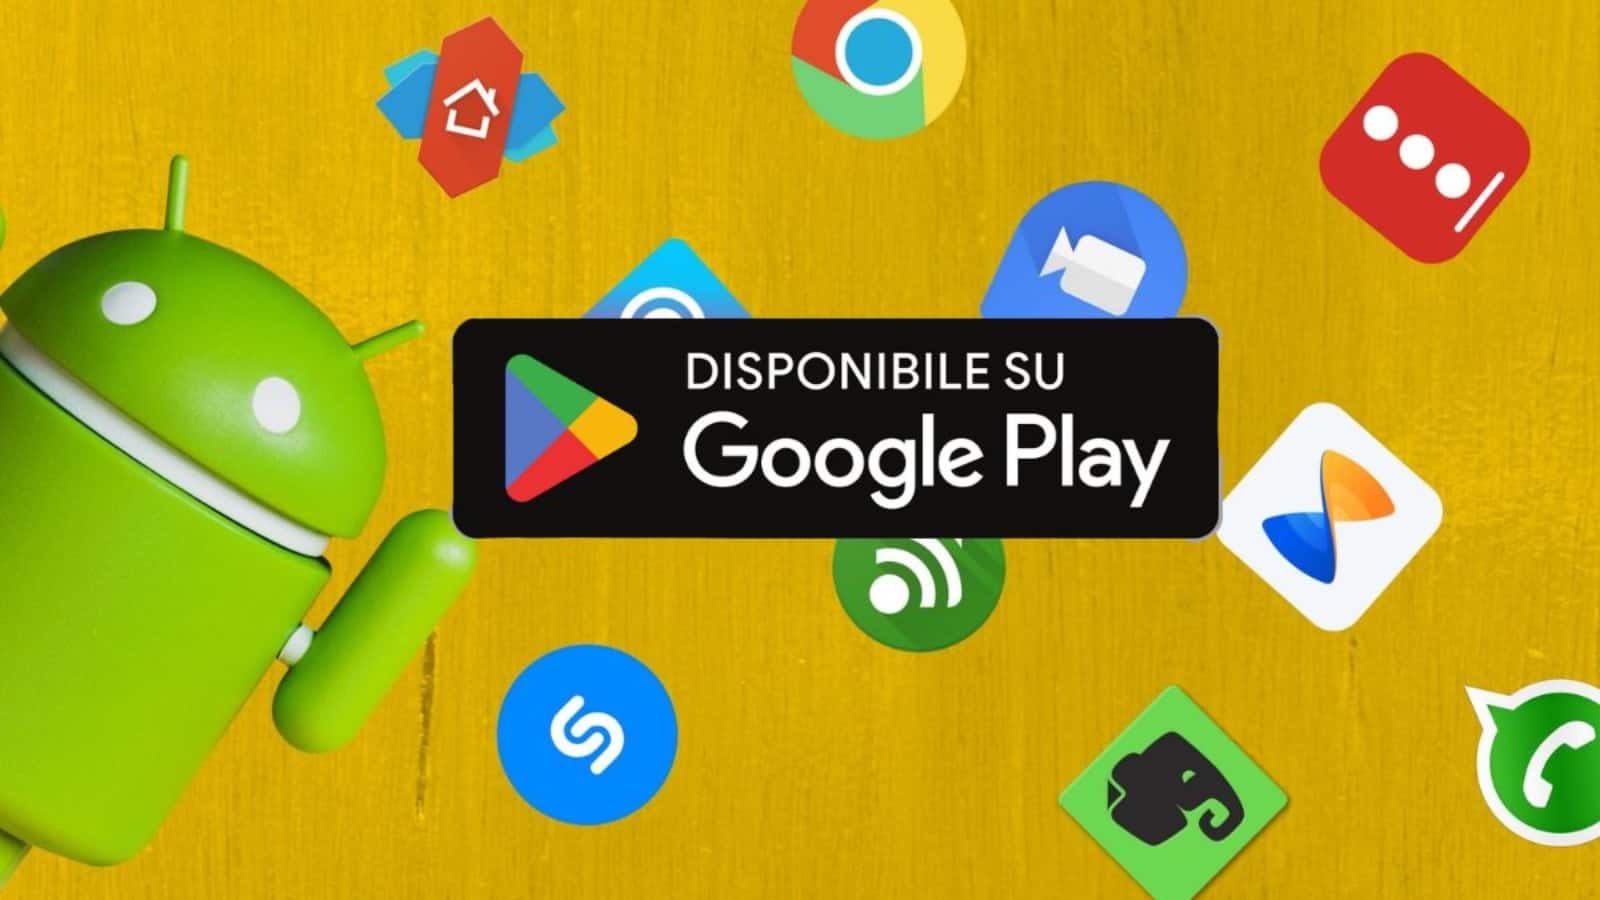 Offerte Play Store, Google regala 10 app a pagamento GRATIS su Android